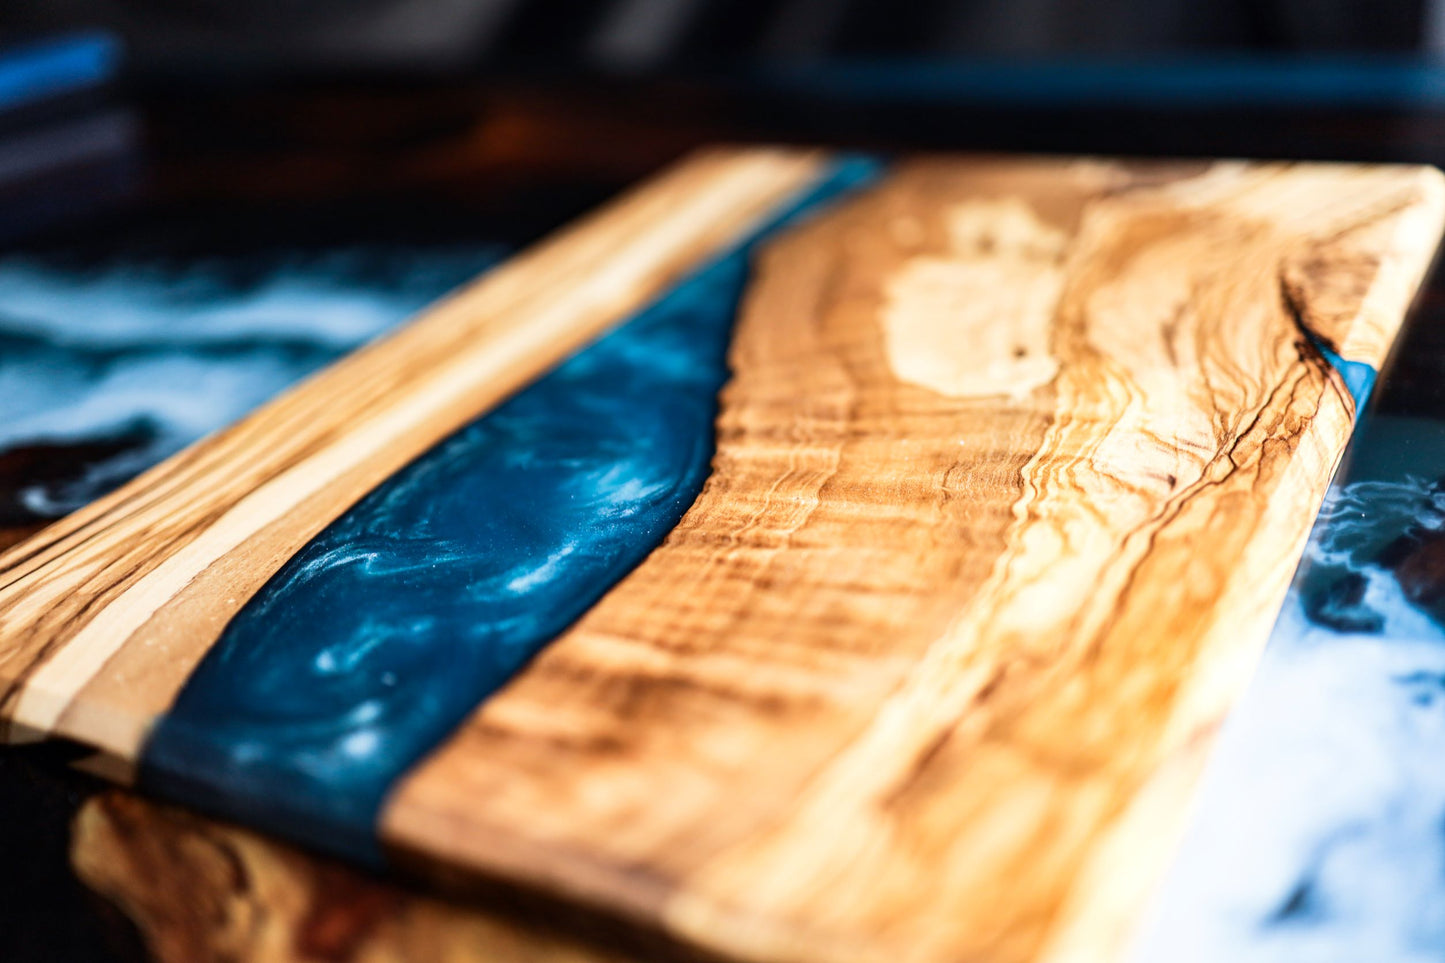 Handmade Olive Wood Live Edge Cutting Board with Glittery Blue River